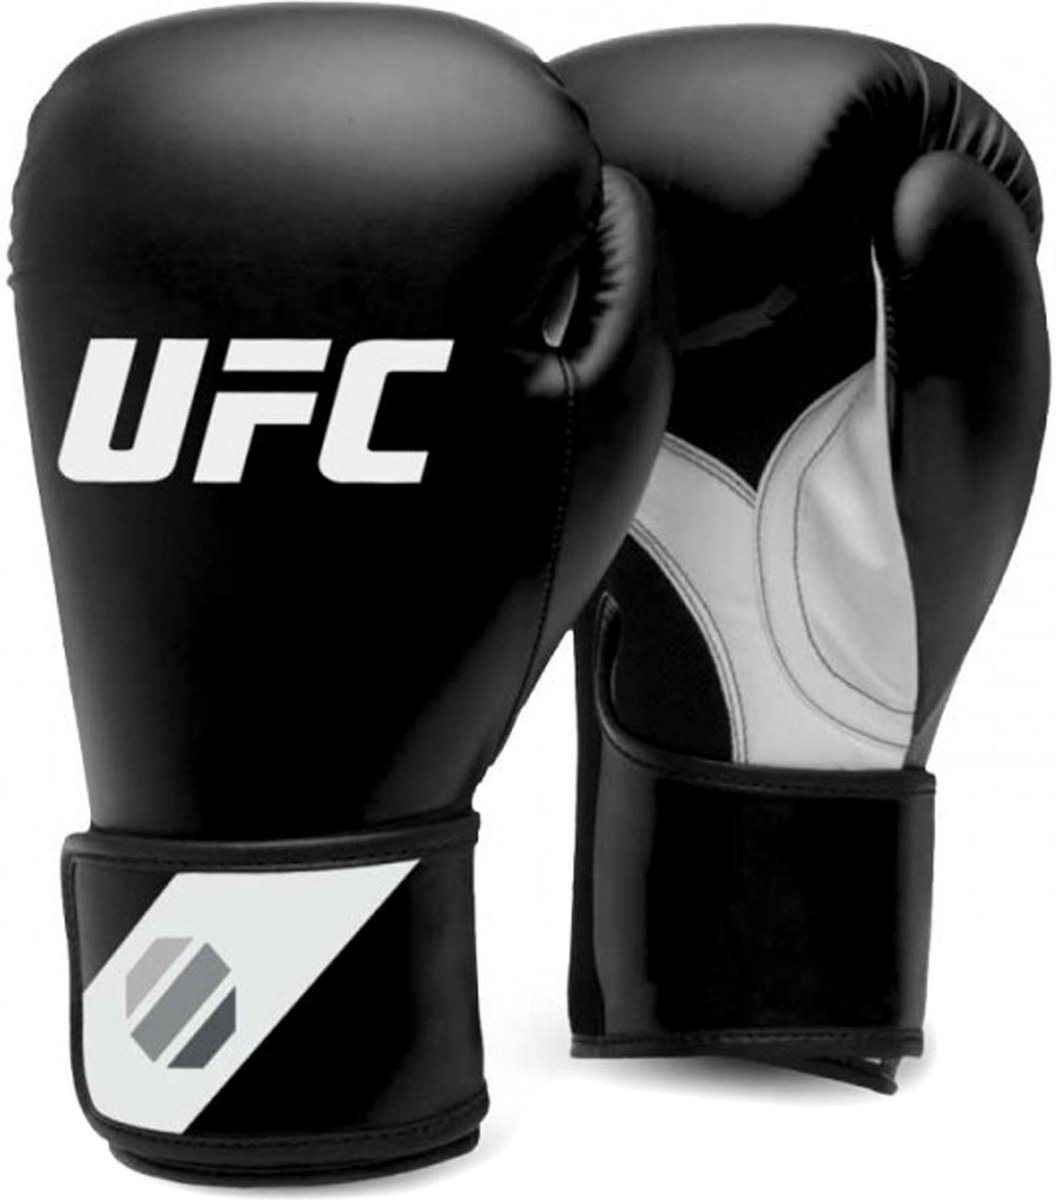 UFC - Training (kick)bokshandschoenen (14 oz - Zwart/Wit)